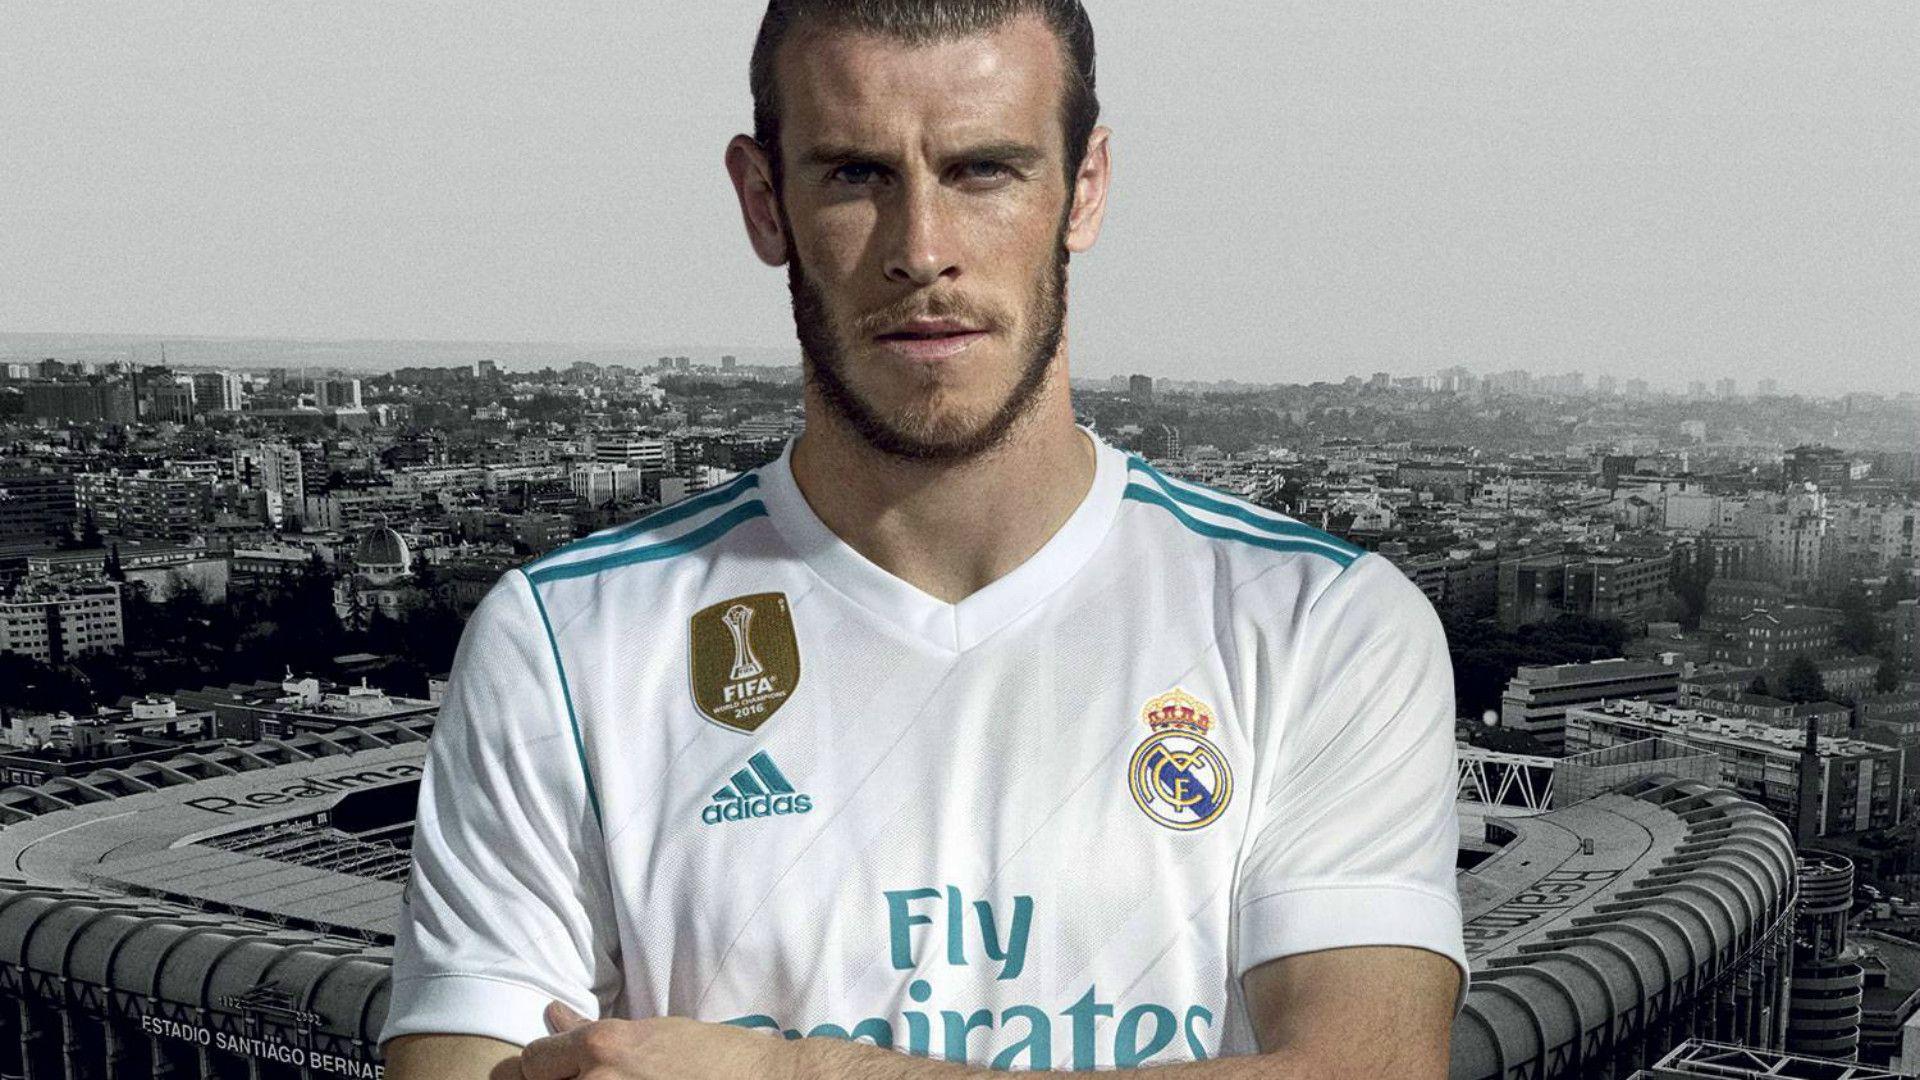 Gareth Bale Wallpaper 2018 HD